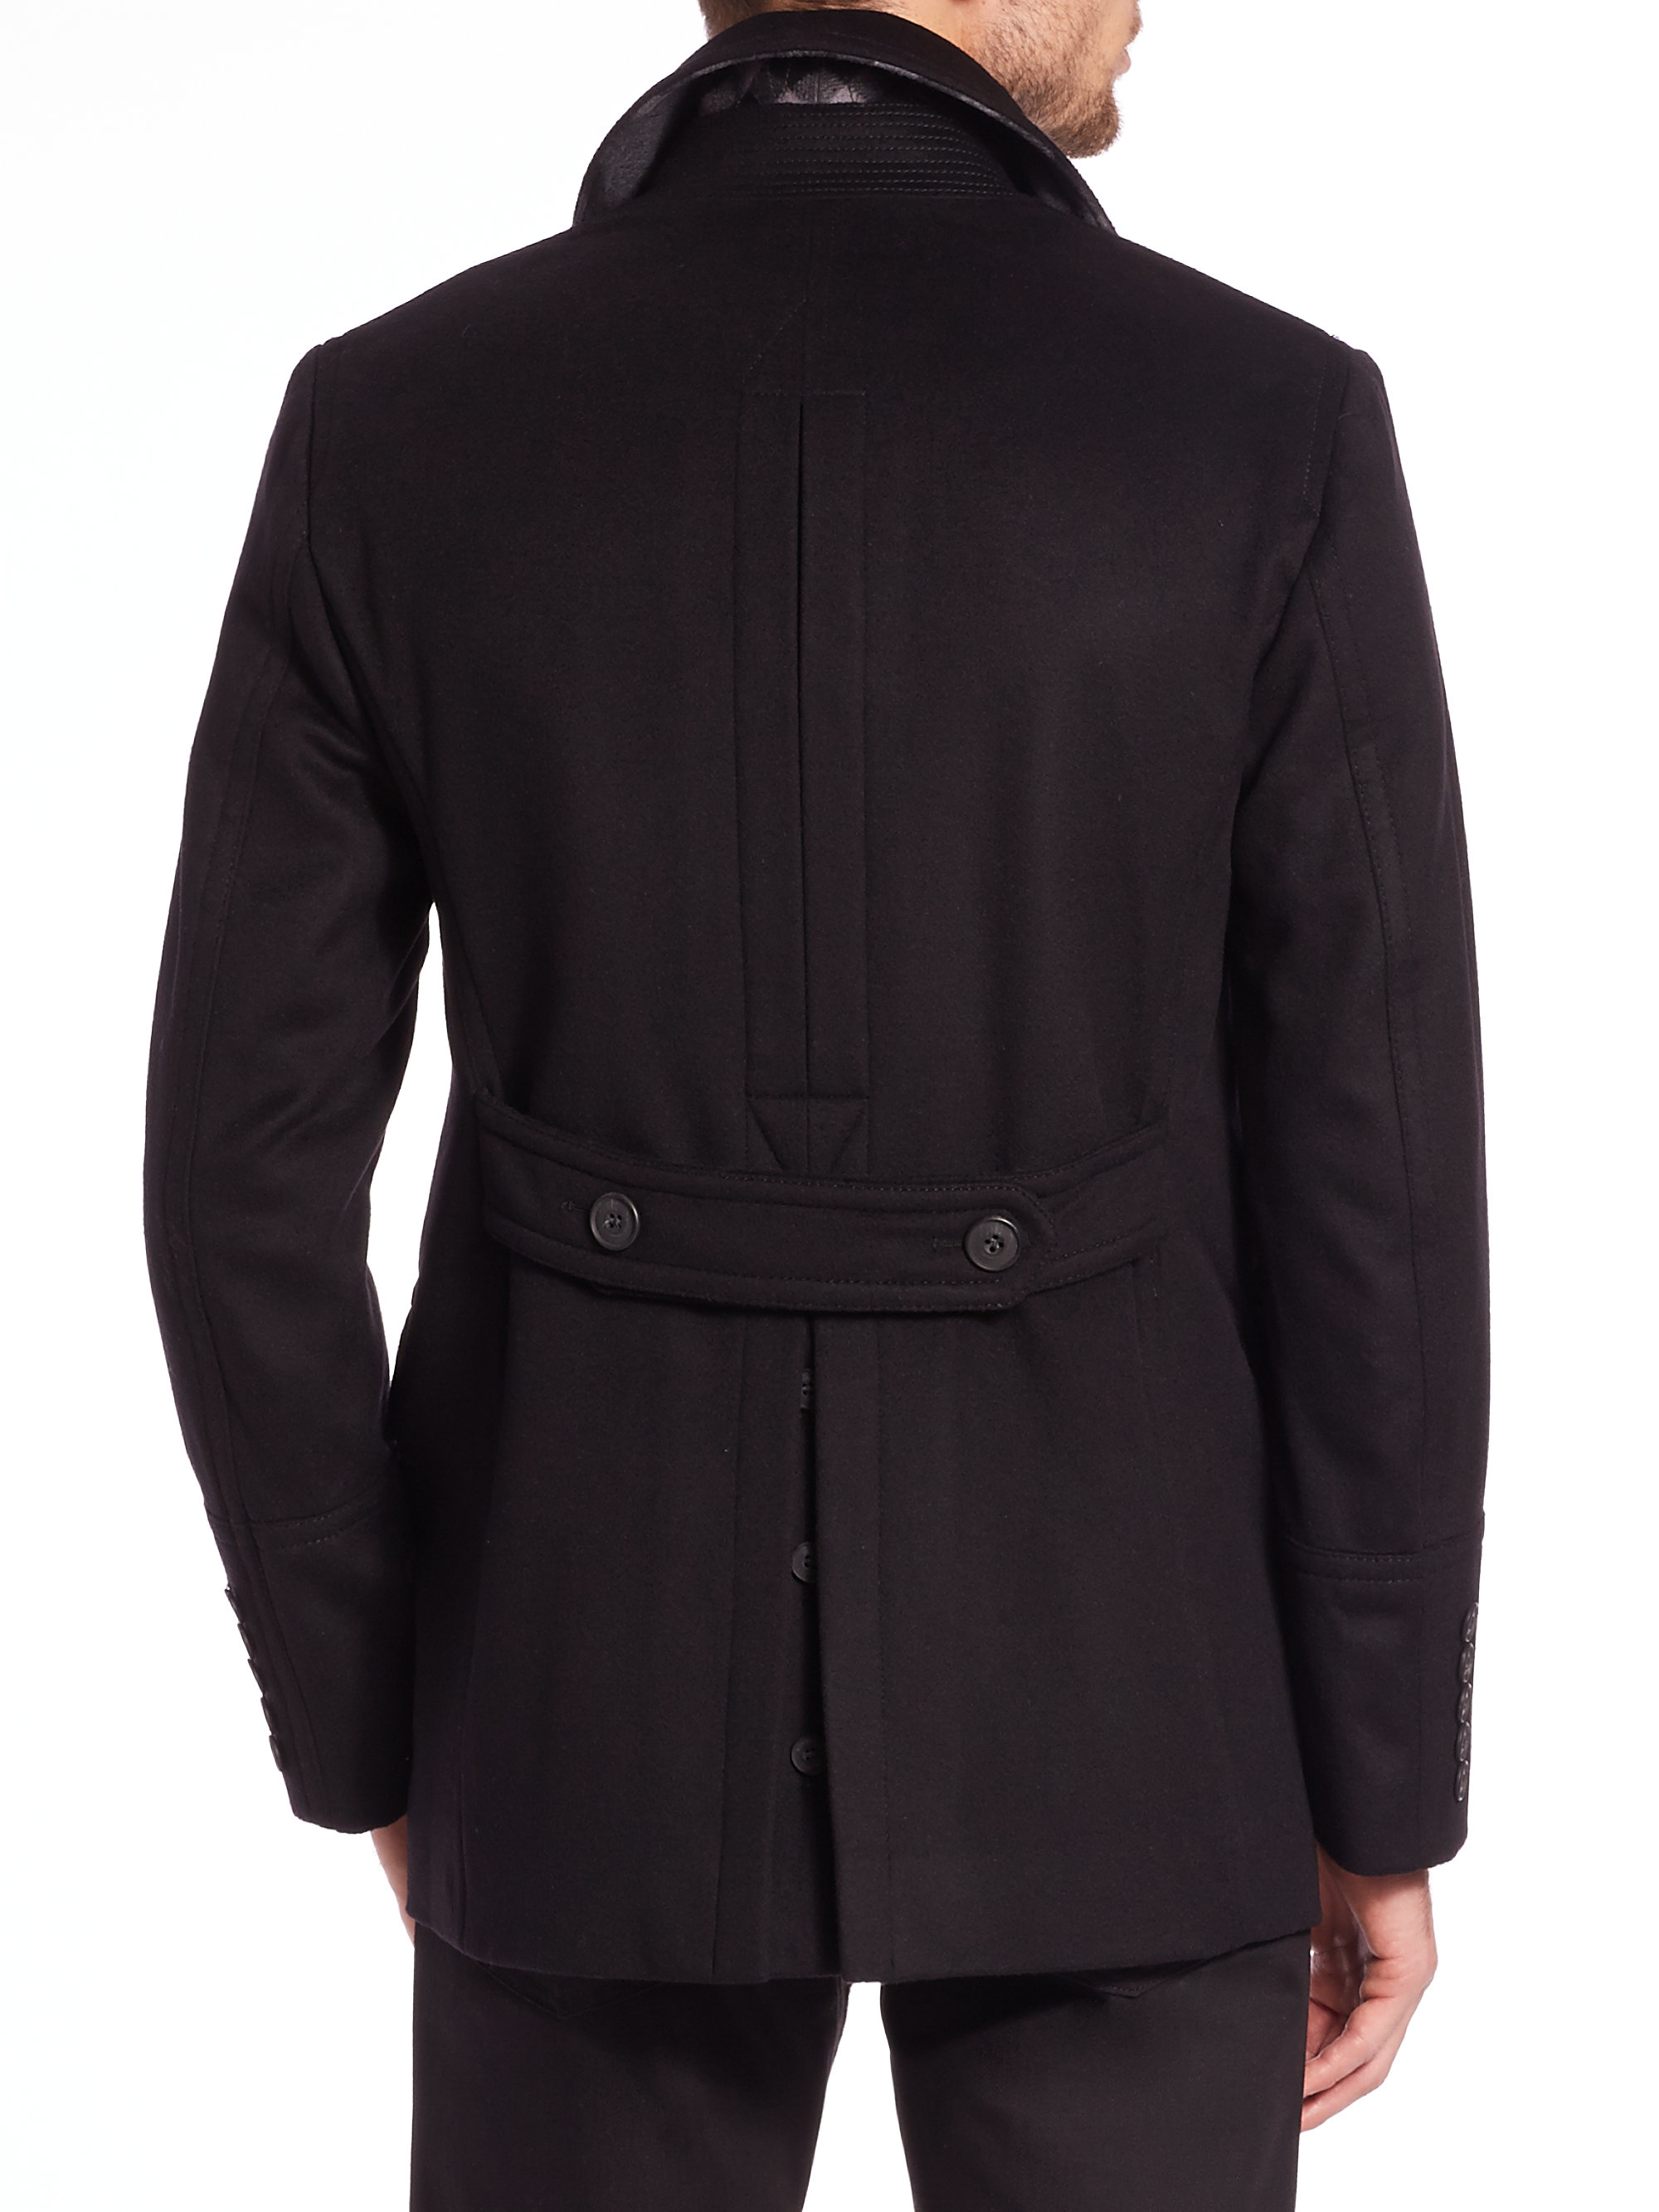 Burberry Bateson Virgin Wool & Cashmere Peacoat in Black for Men - Lyst